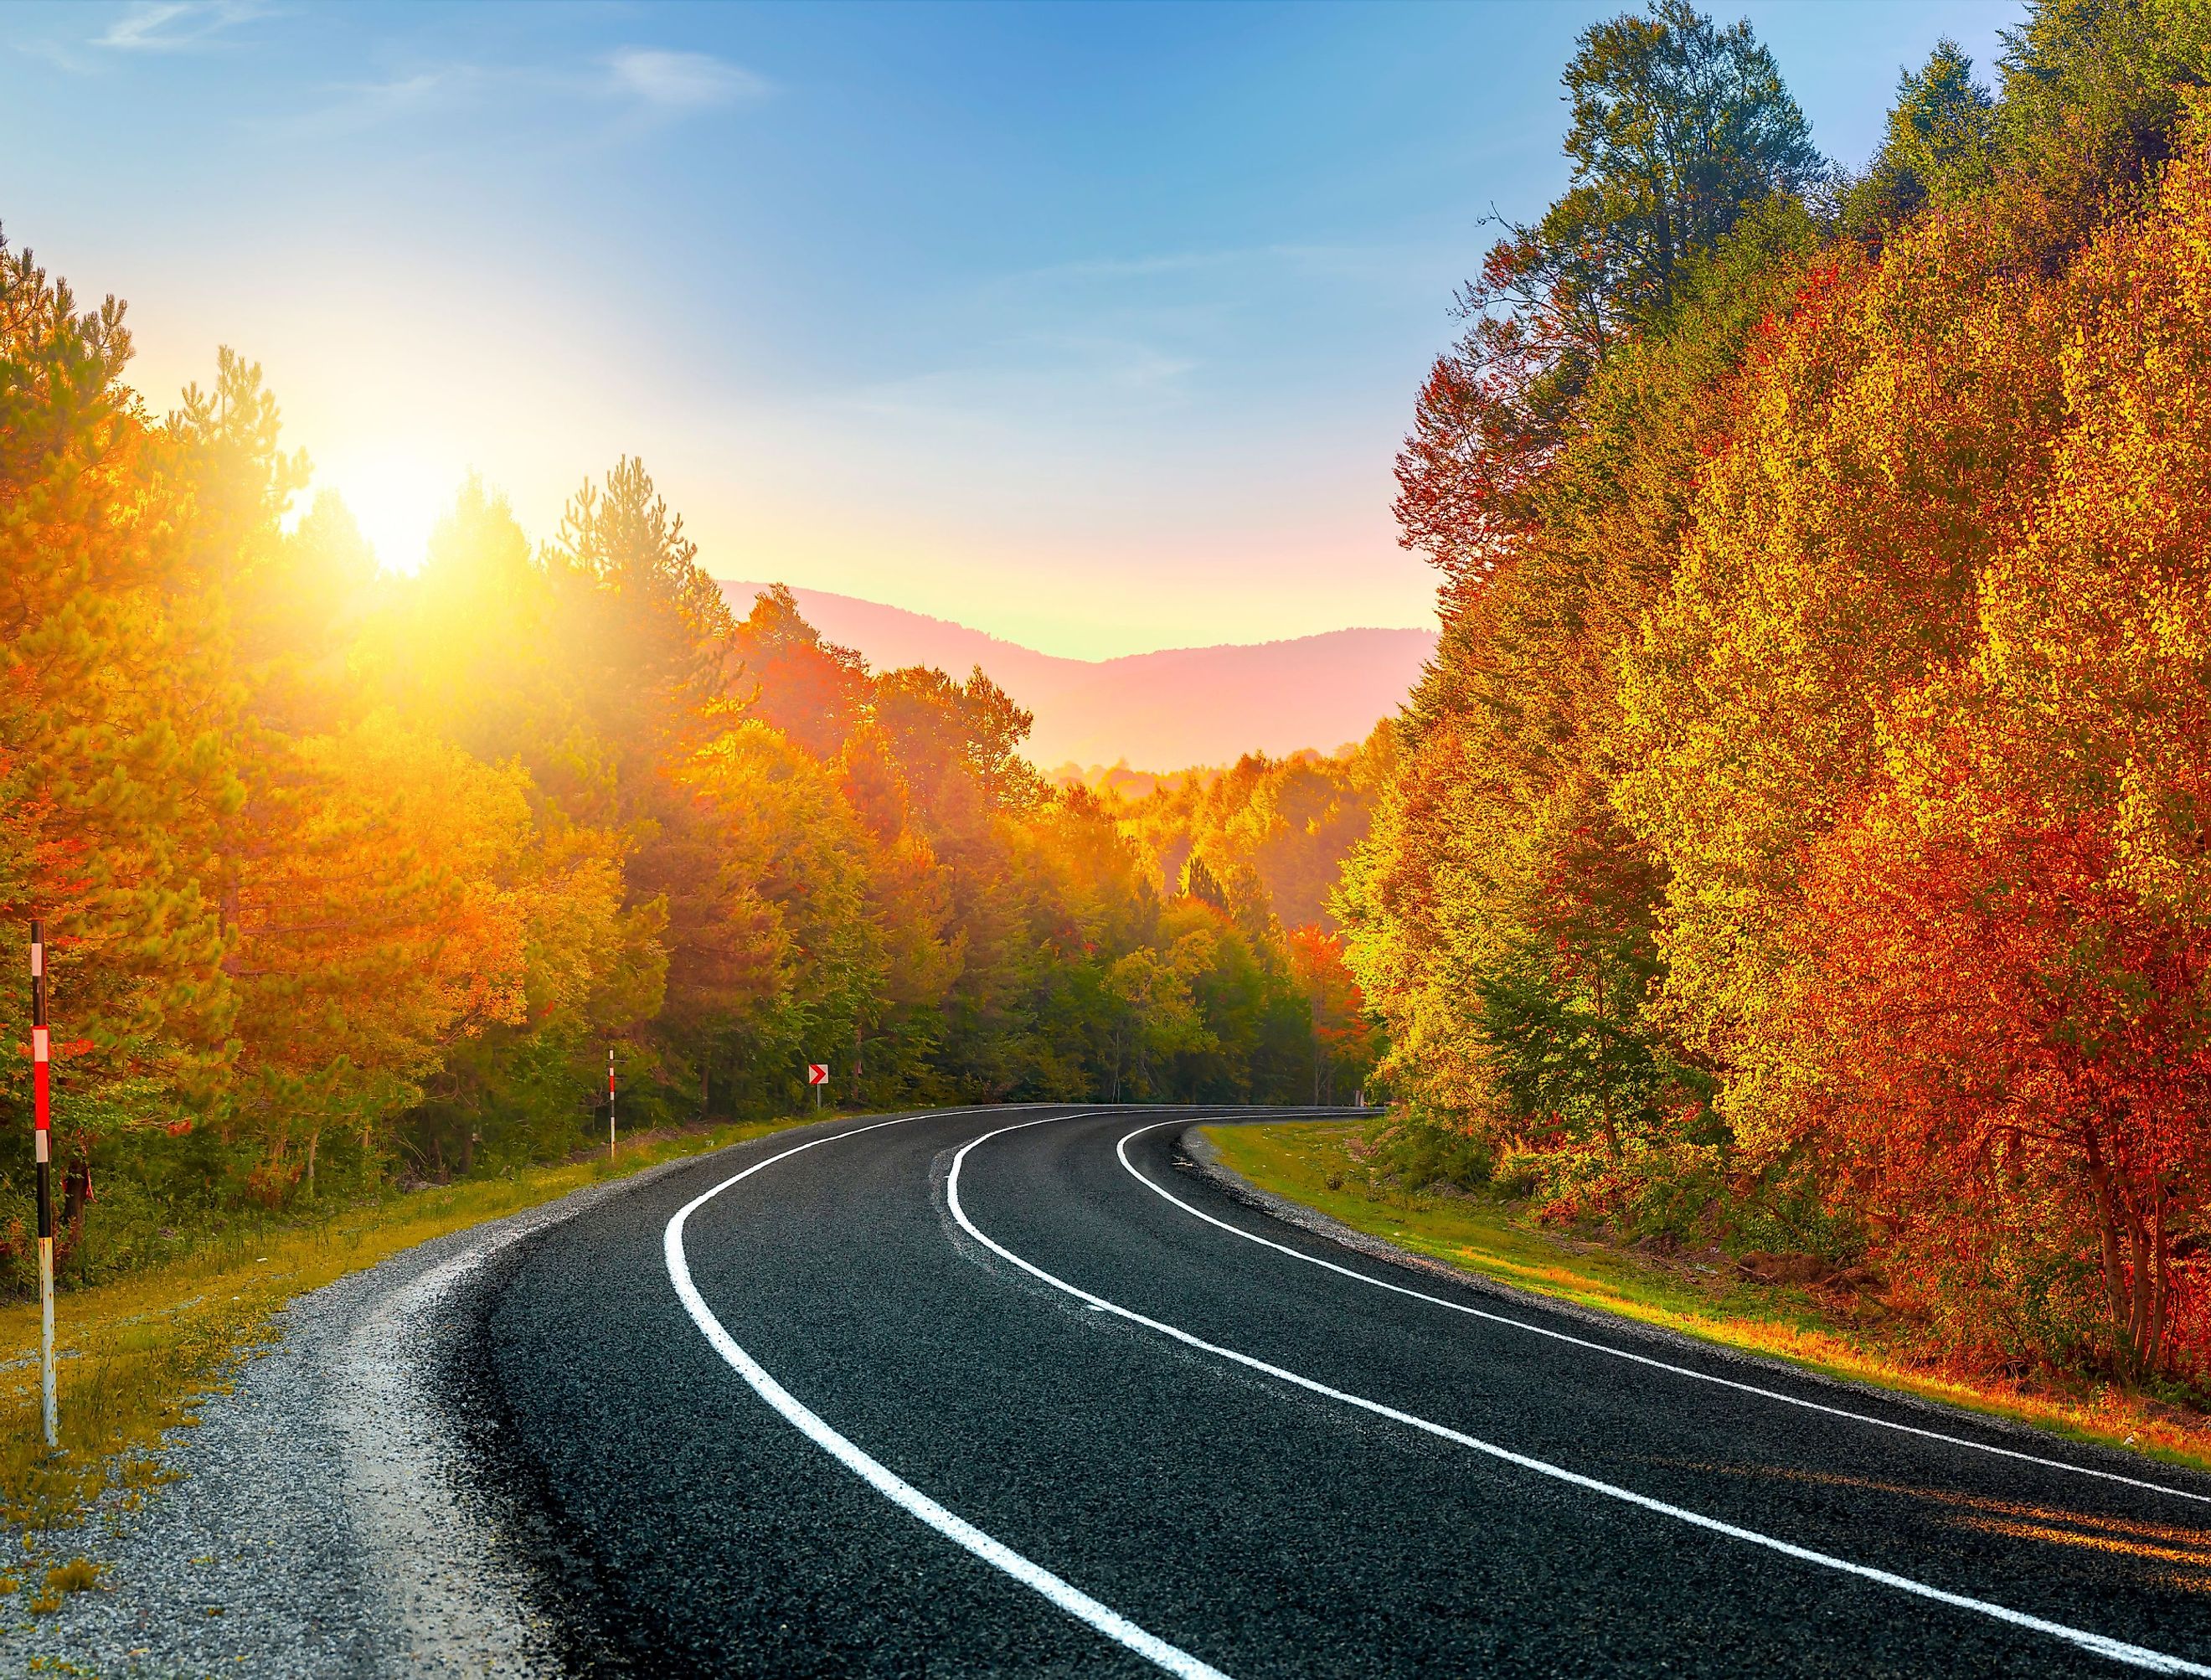 Highway landscape in autumn. Image credit ozkan ulucam via Shutterstock